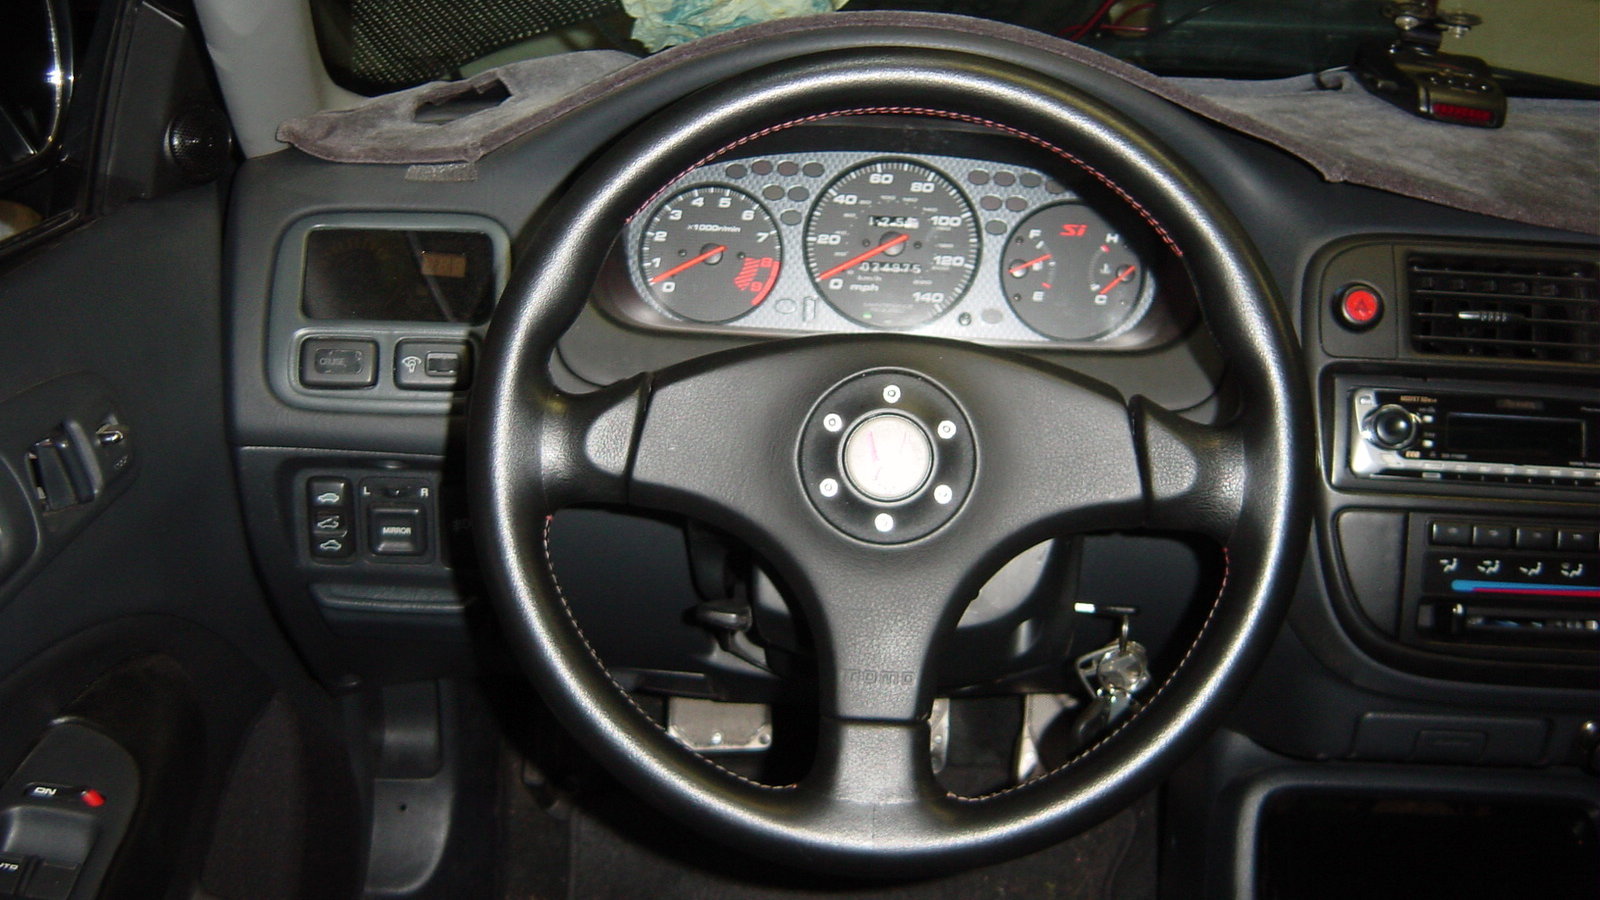 7 Interior Modifications For The Honda Civic Honda Tech